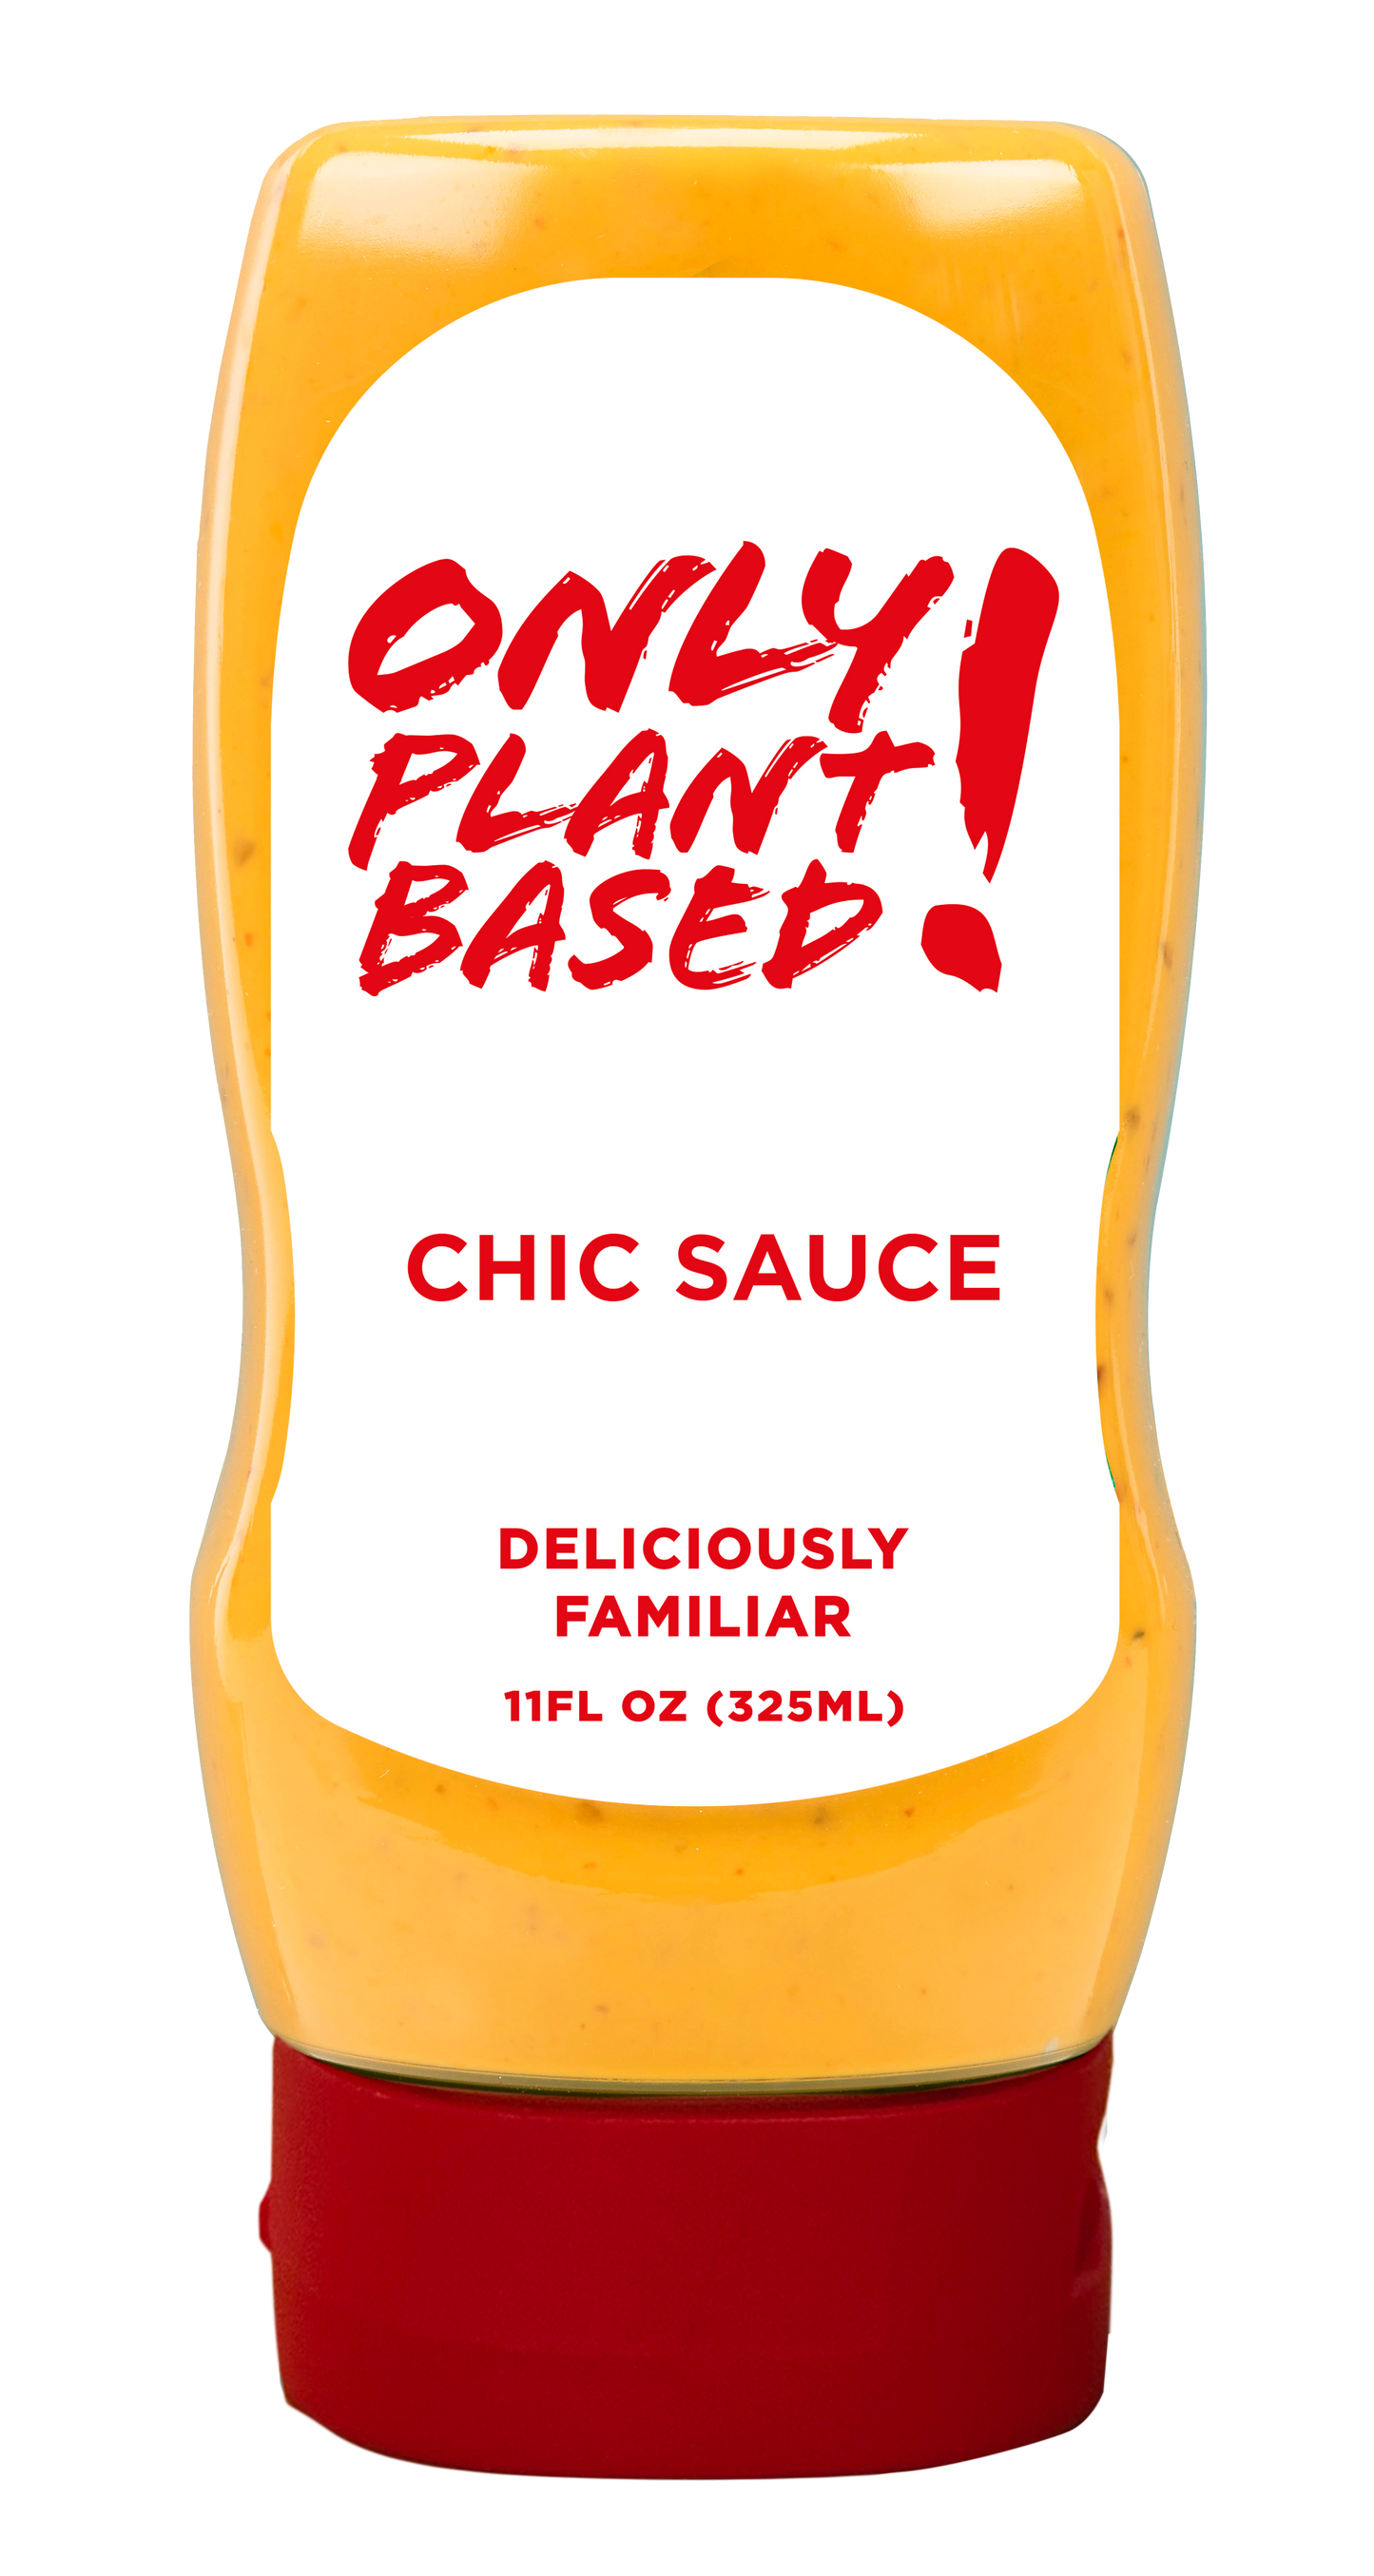 Chic Sauce